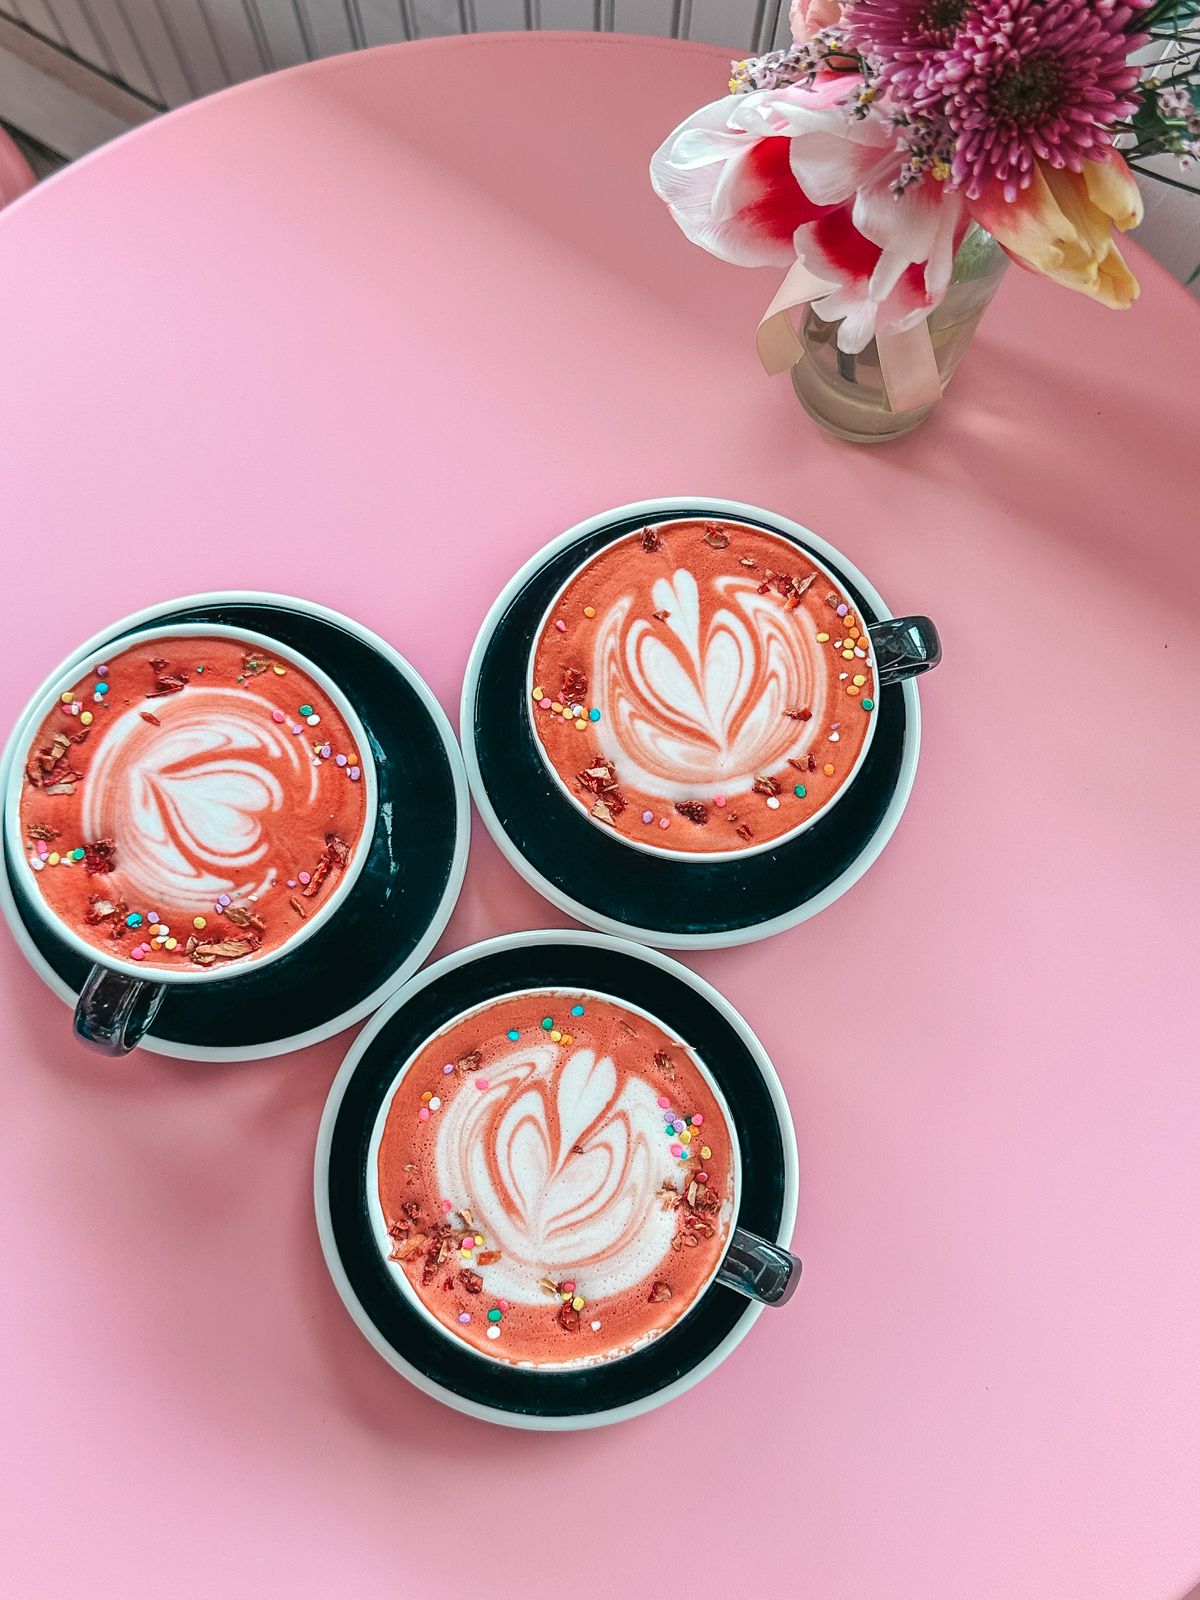 Strawberry shortcake lattes from Elevenses Co